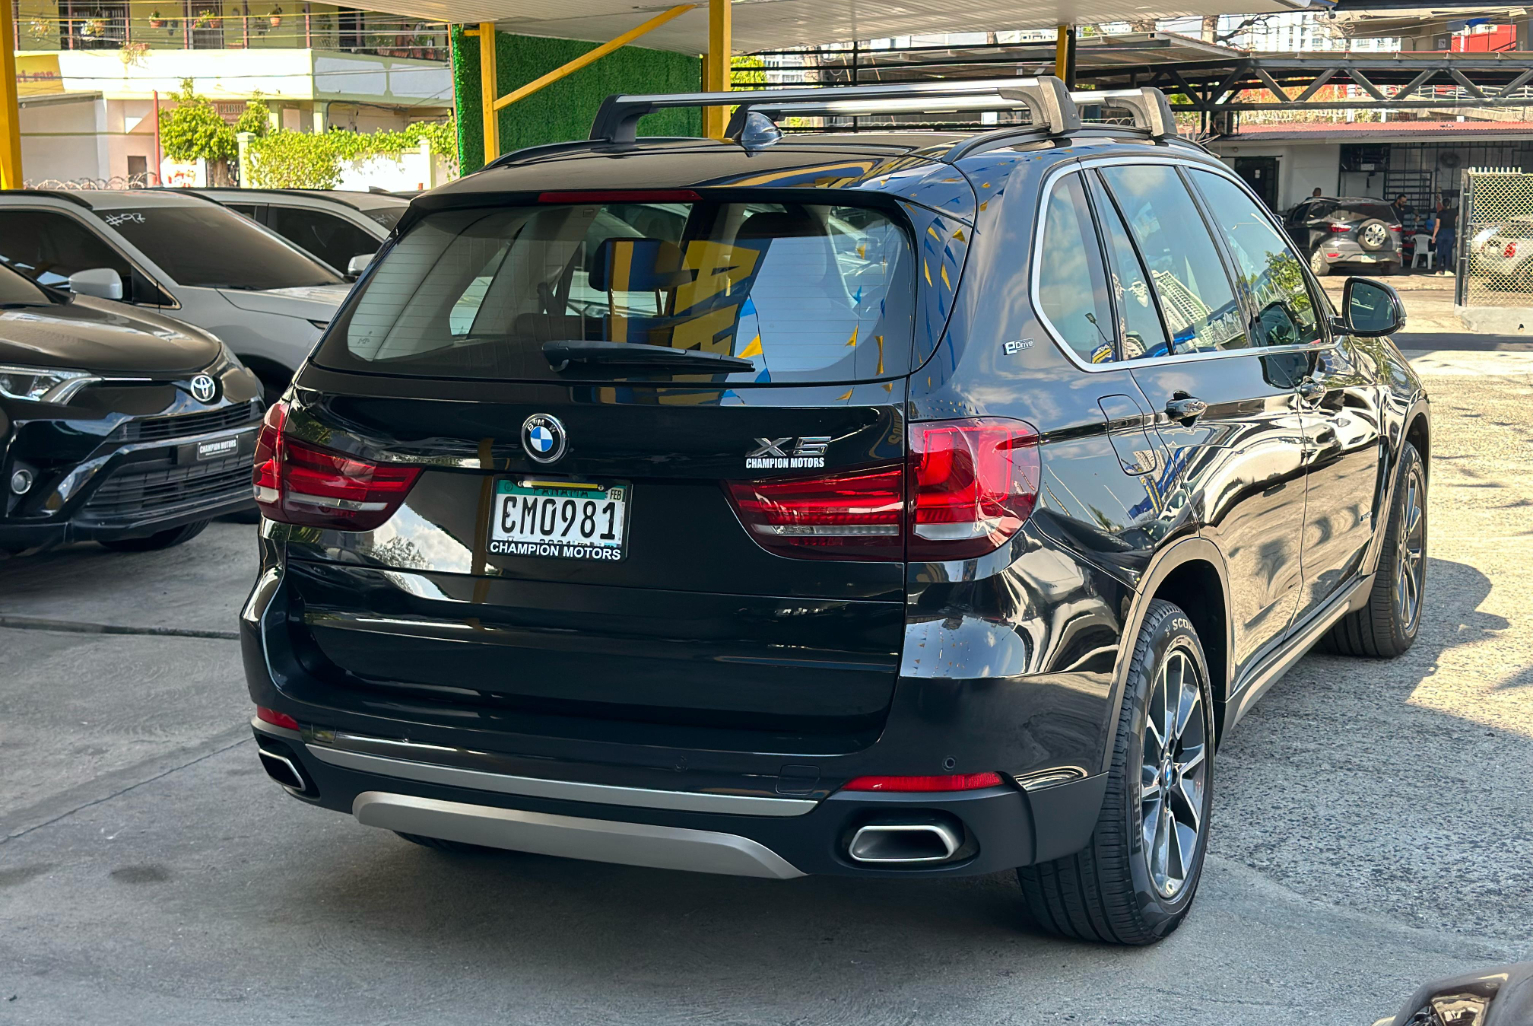 BMW X5 eDrive 2018 Automático color Negro, Imagen #4